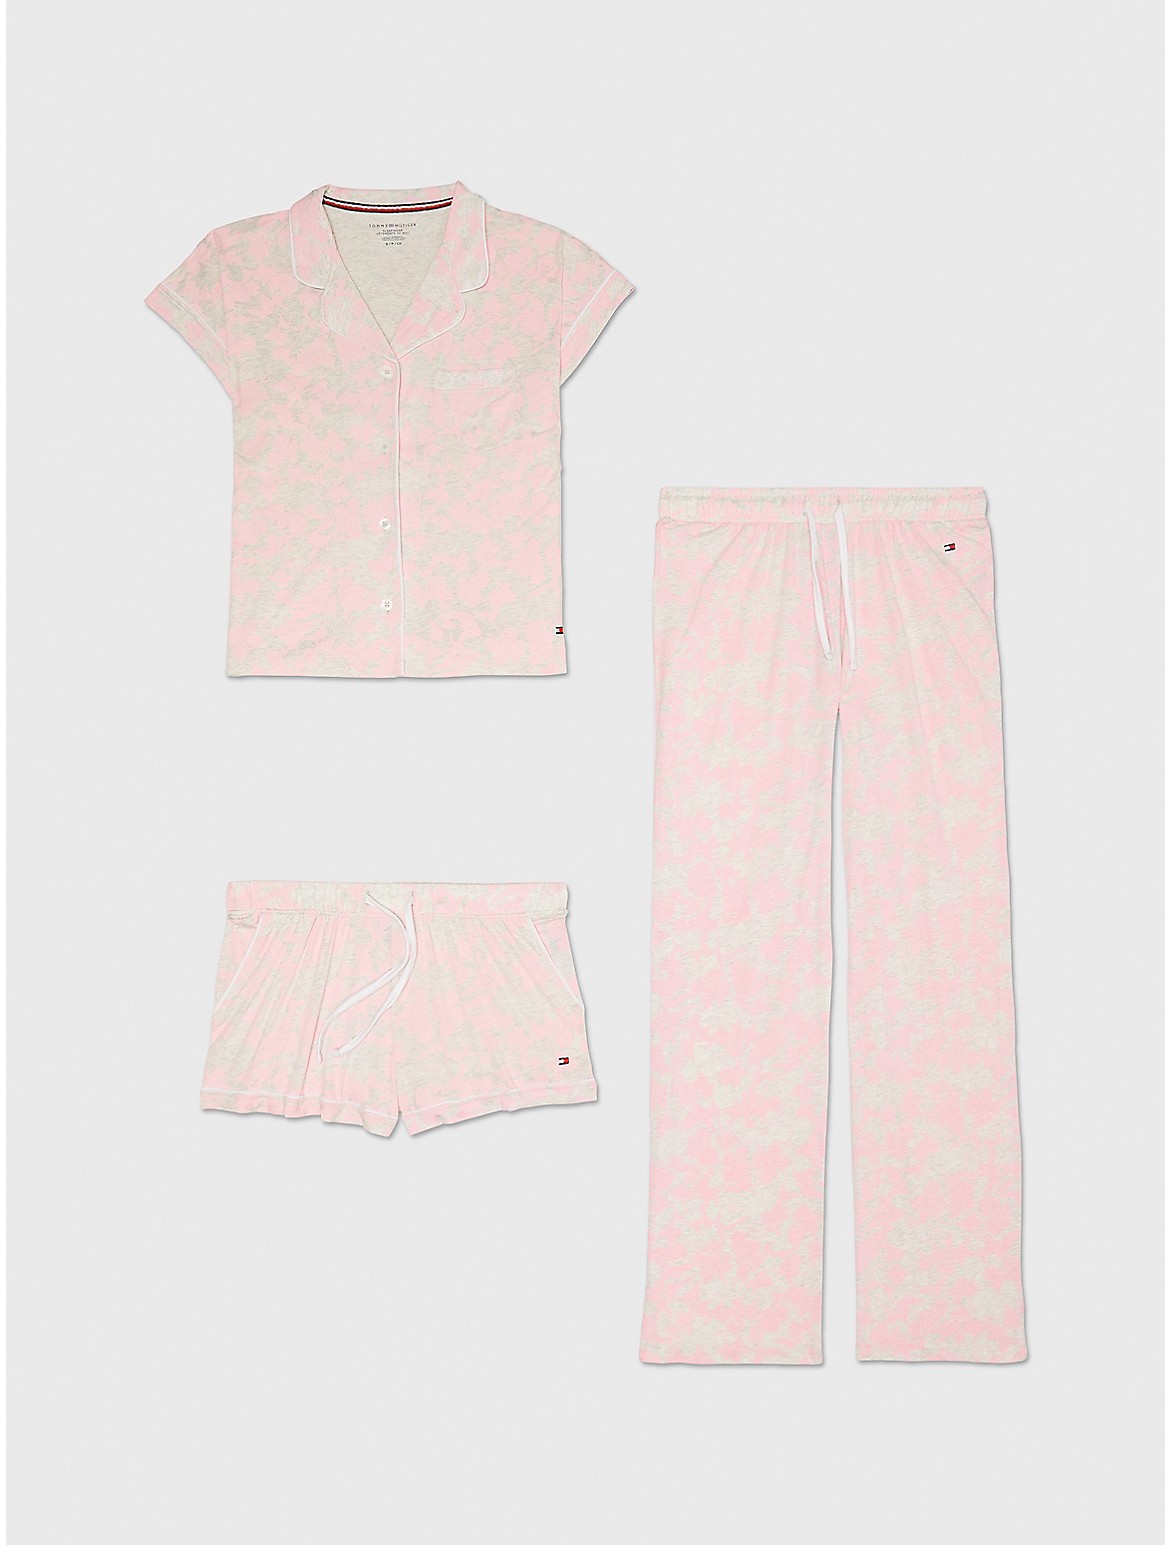 Tommy Hilfiger Women's Floral Sleep Set - Pink - L